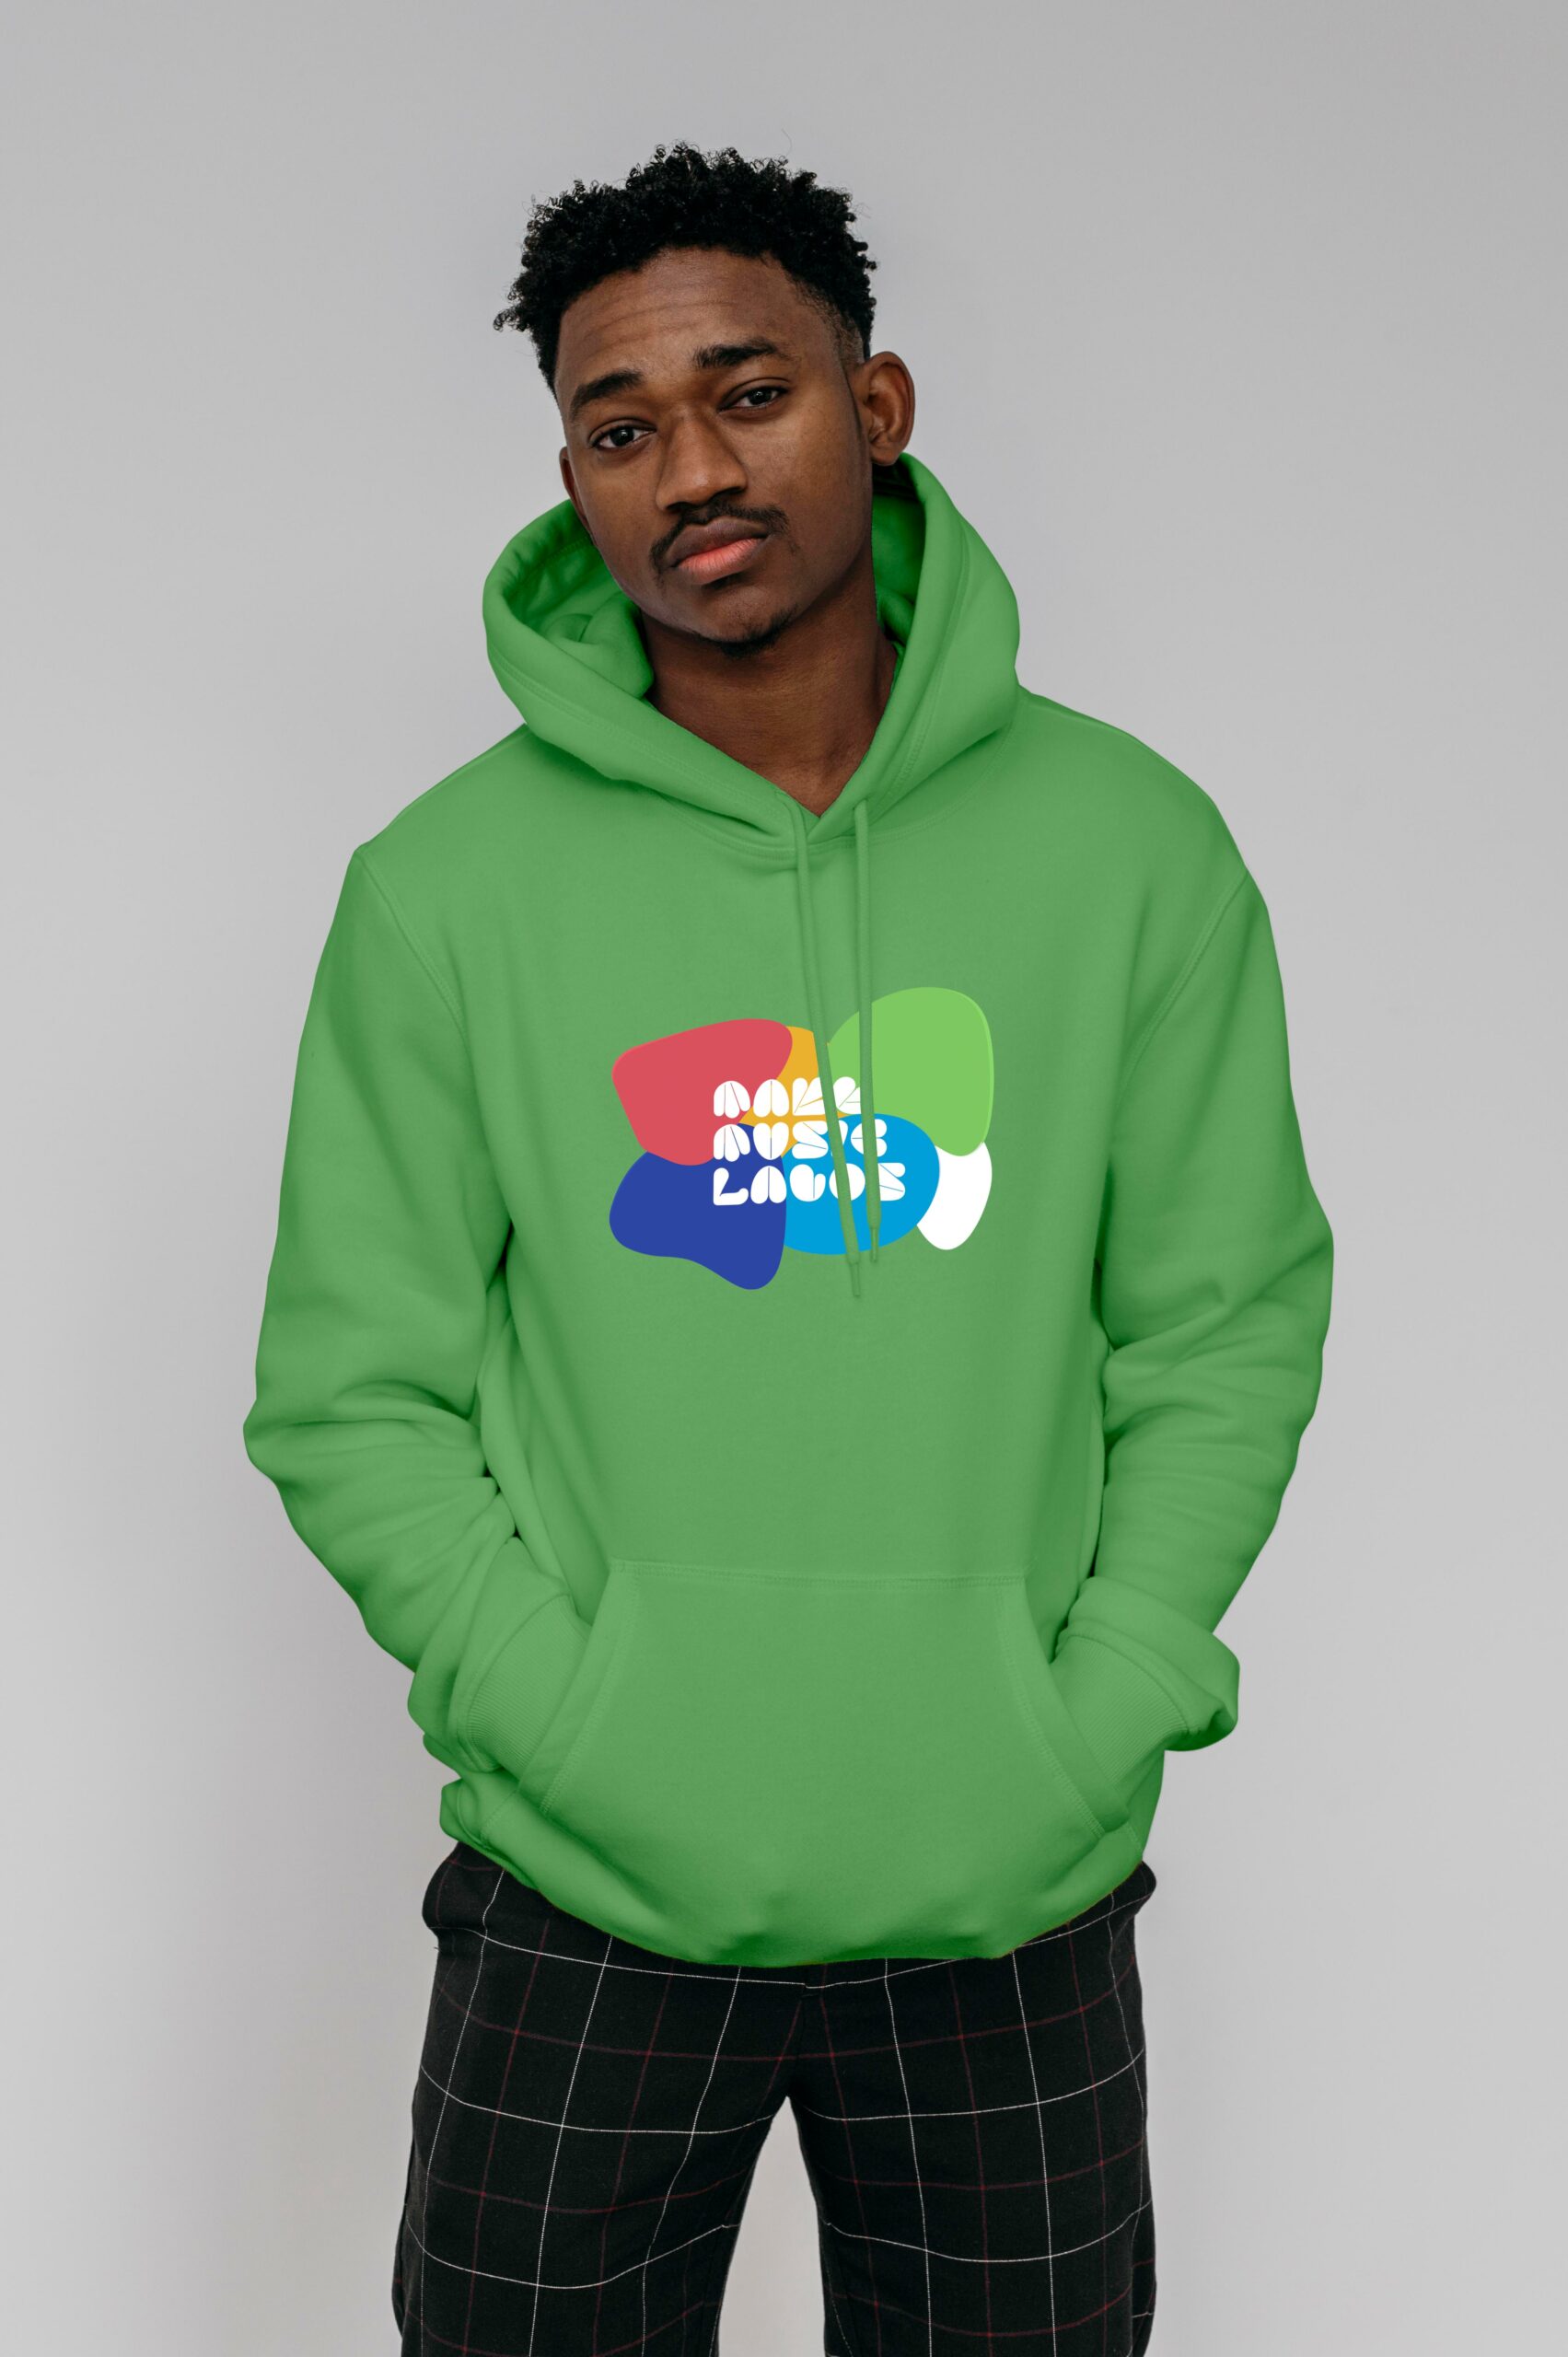 MML Green hoodies